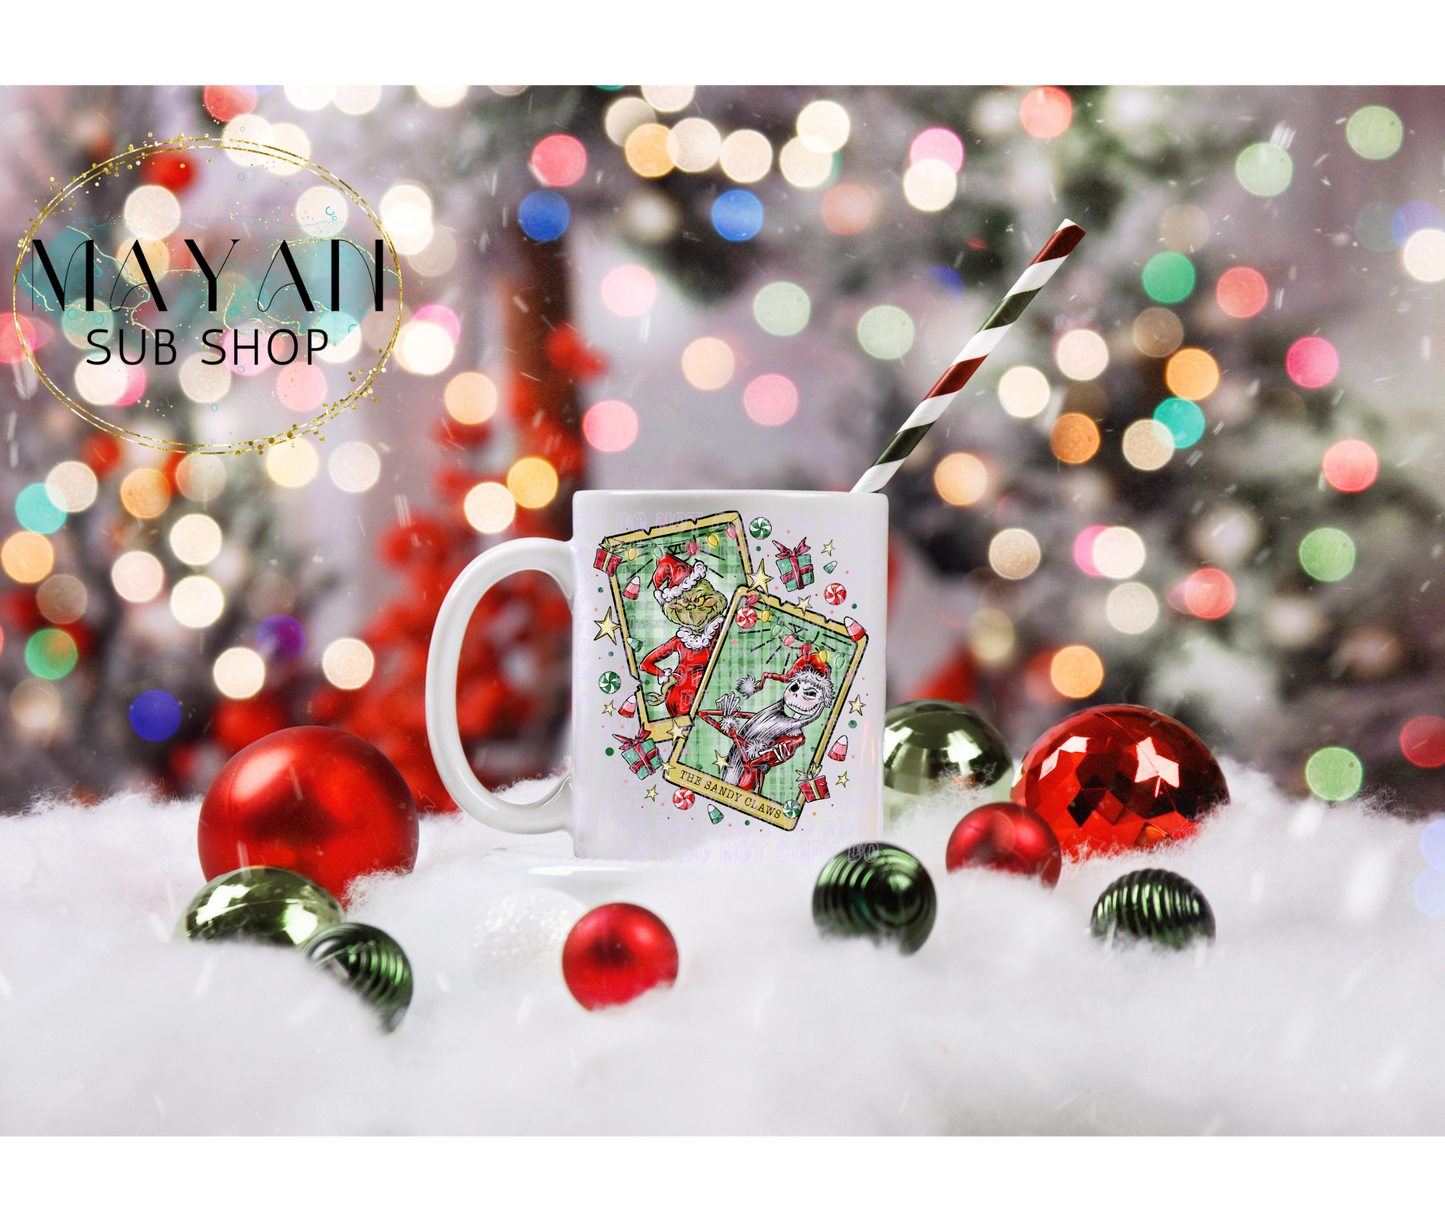 Santa's tarot cards 15 oz. coffee mug. -Mayan Sub Shop